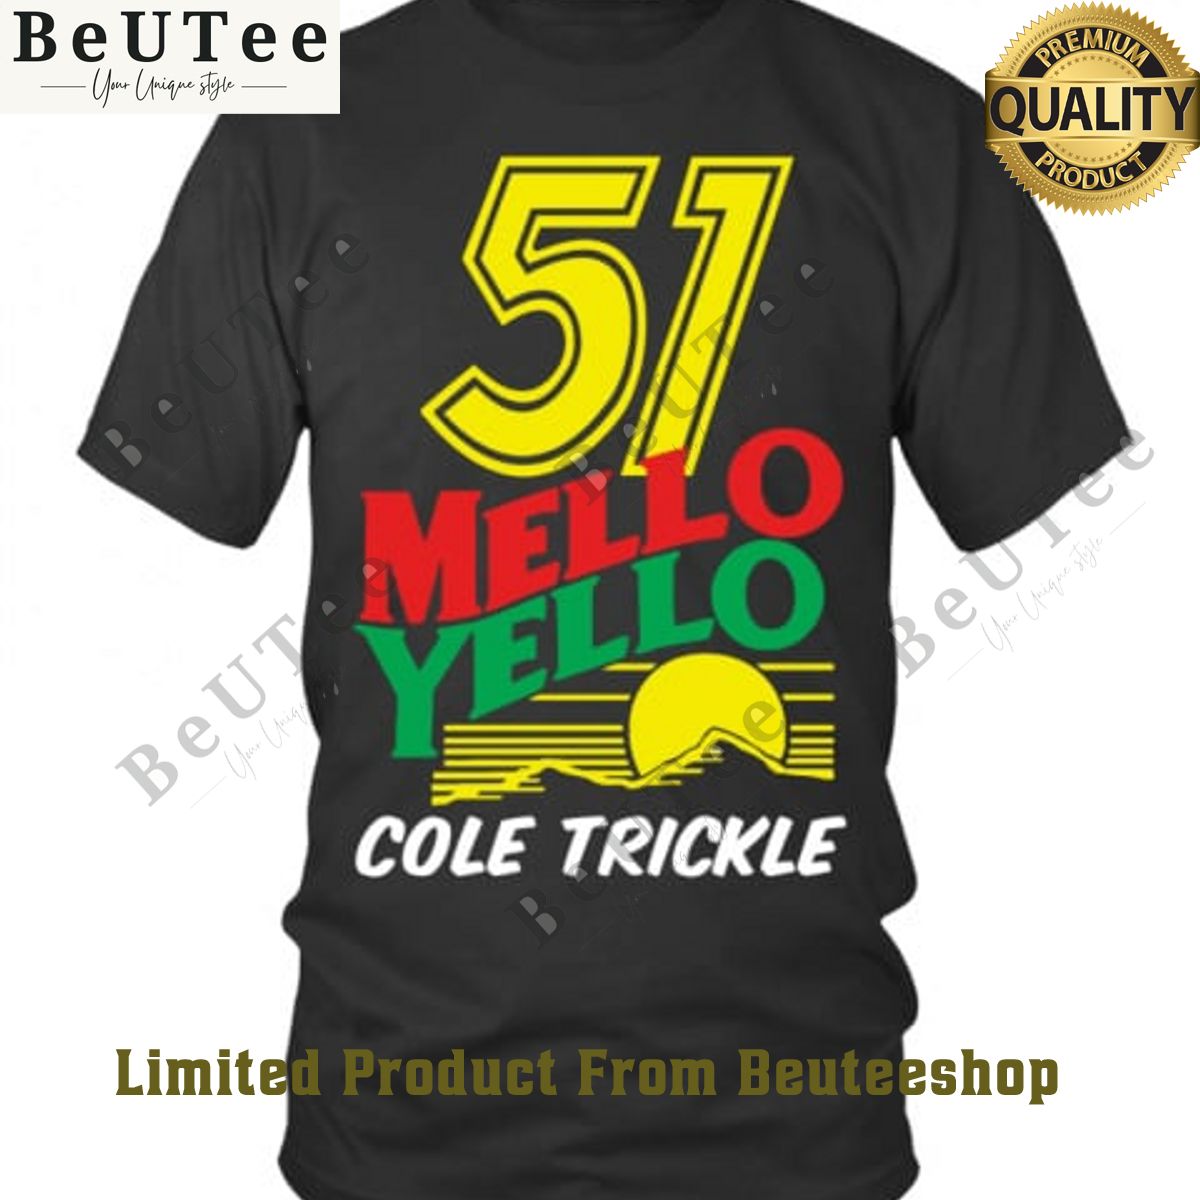 enjoy mello yello 34th anniversary days of thunder 1990 2024 cole trickle car 51 t shirt 1 sRW6A.jpg